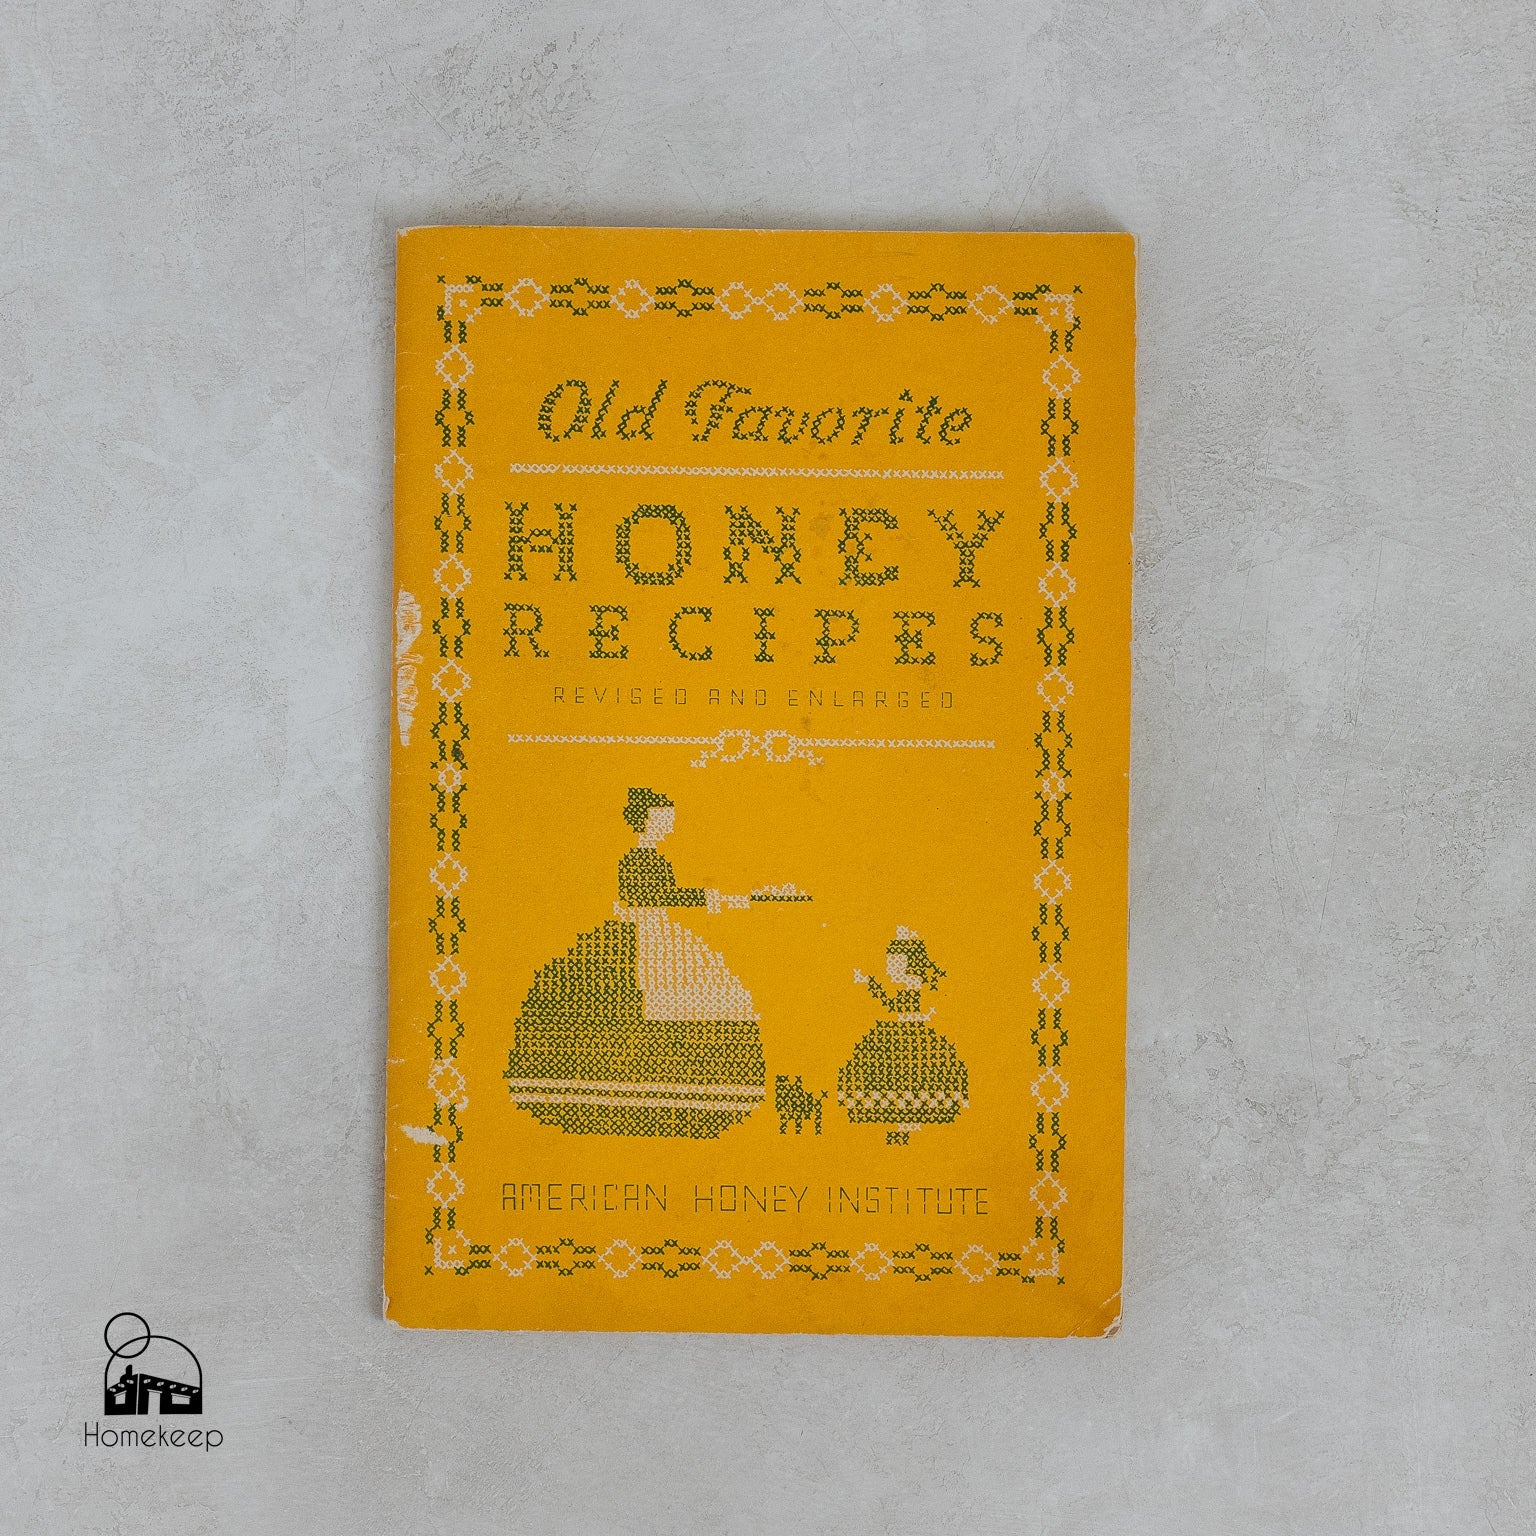 "Old Favorite Honey Recipes" by the American Honey Institute - Homekeep Market